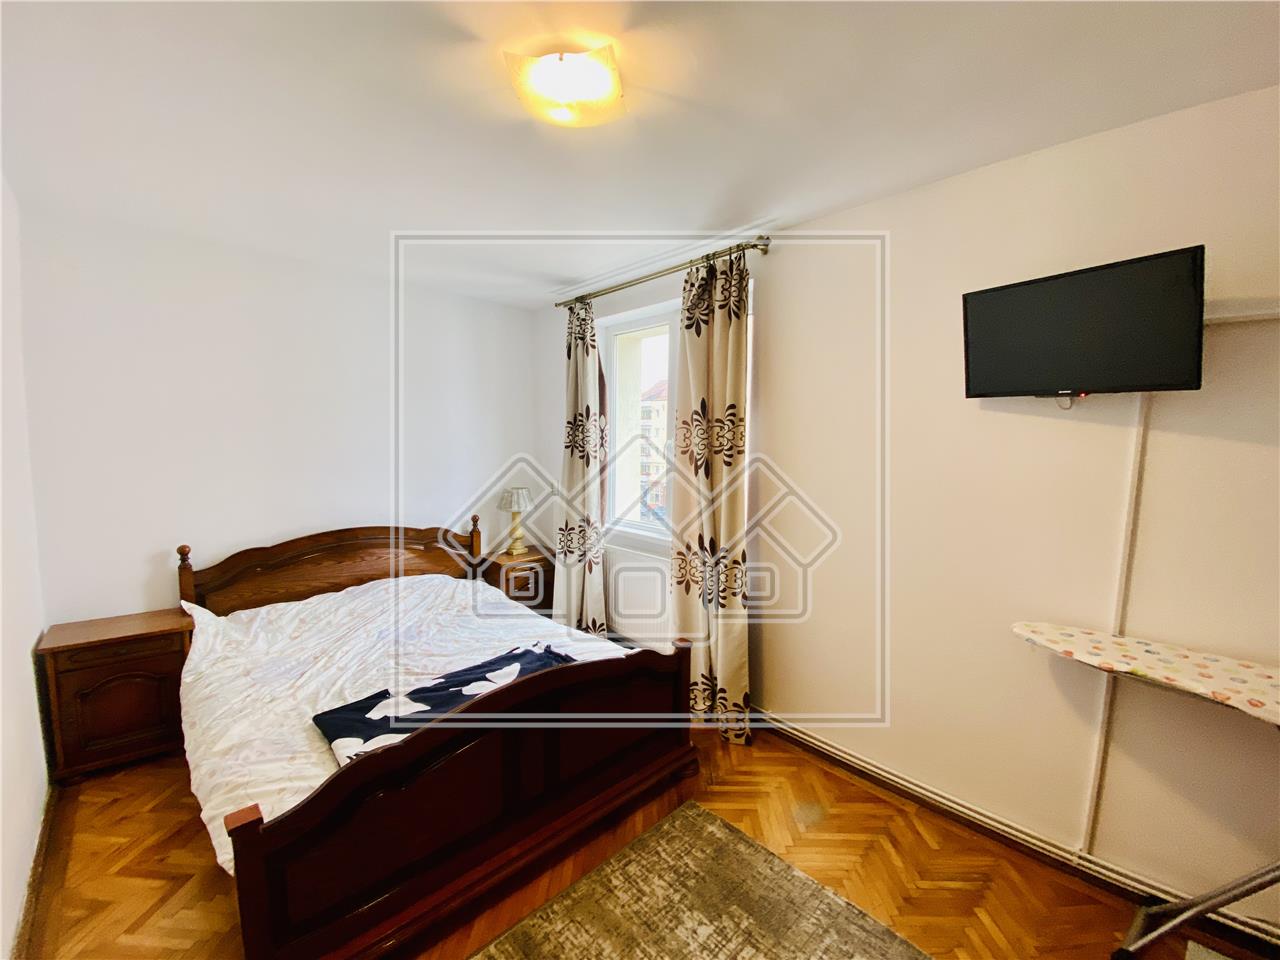 Apartament de vanzare in Sibiu - 2 camere - etaj 3/4 - Calea Dumbravii